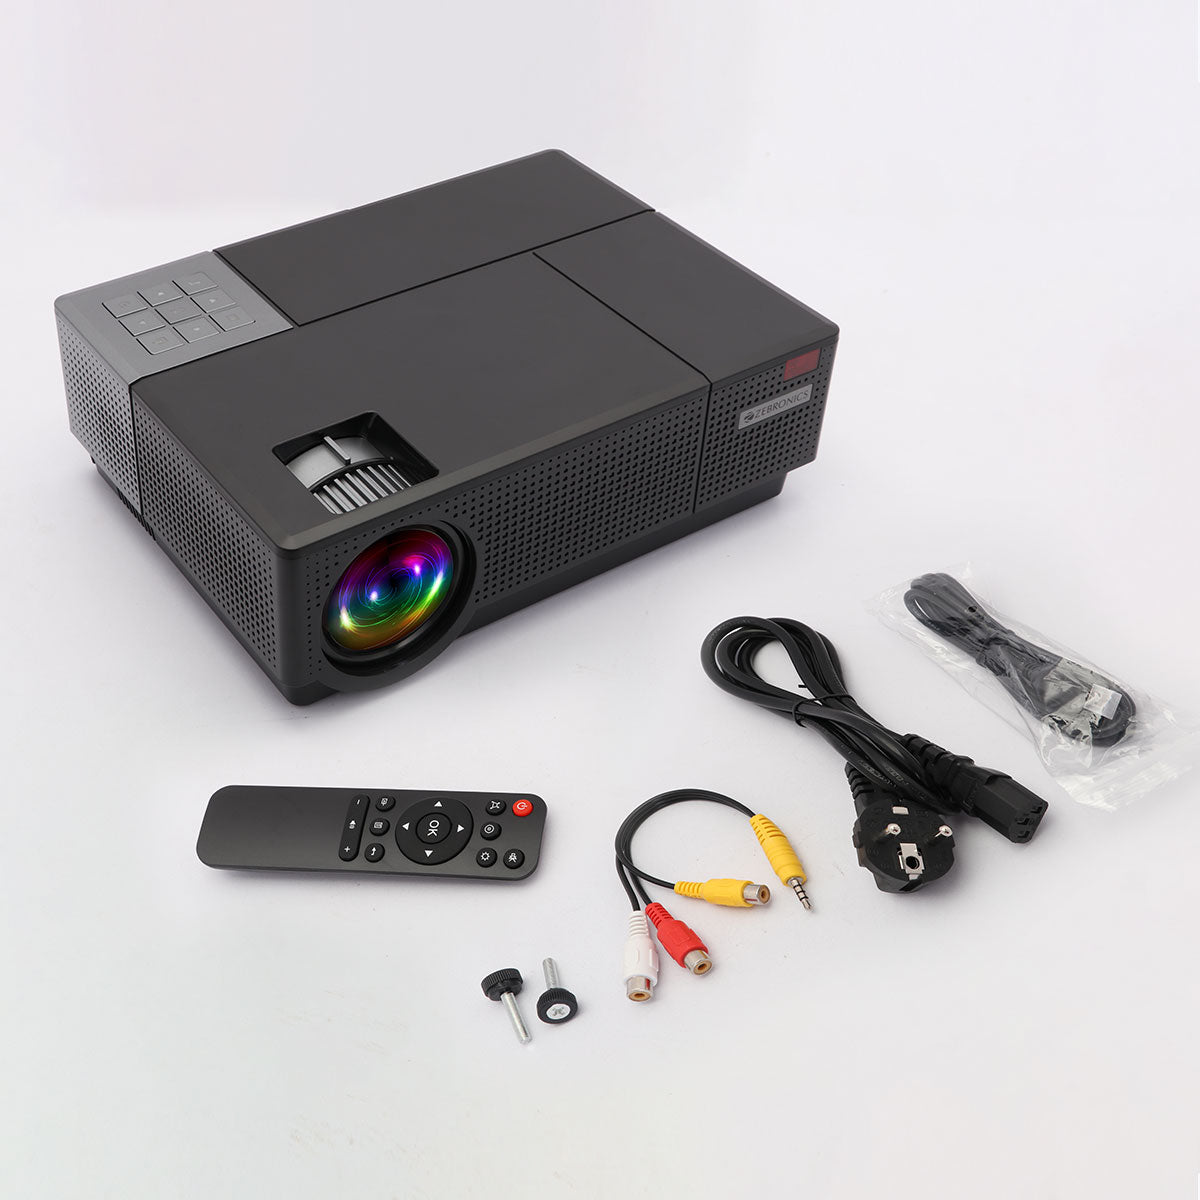 ZEB-LP4000FHD - LED Projector - Zebronics